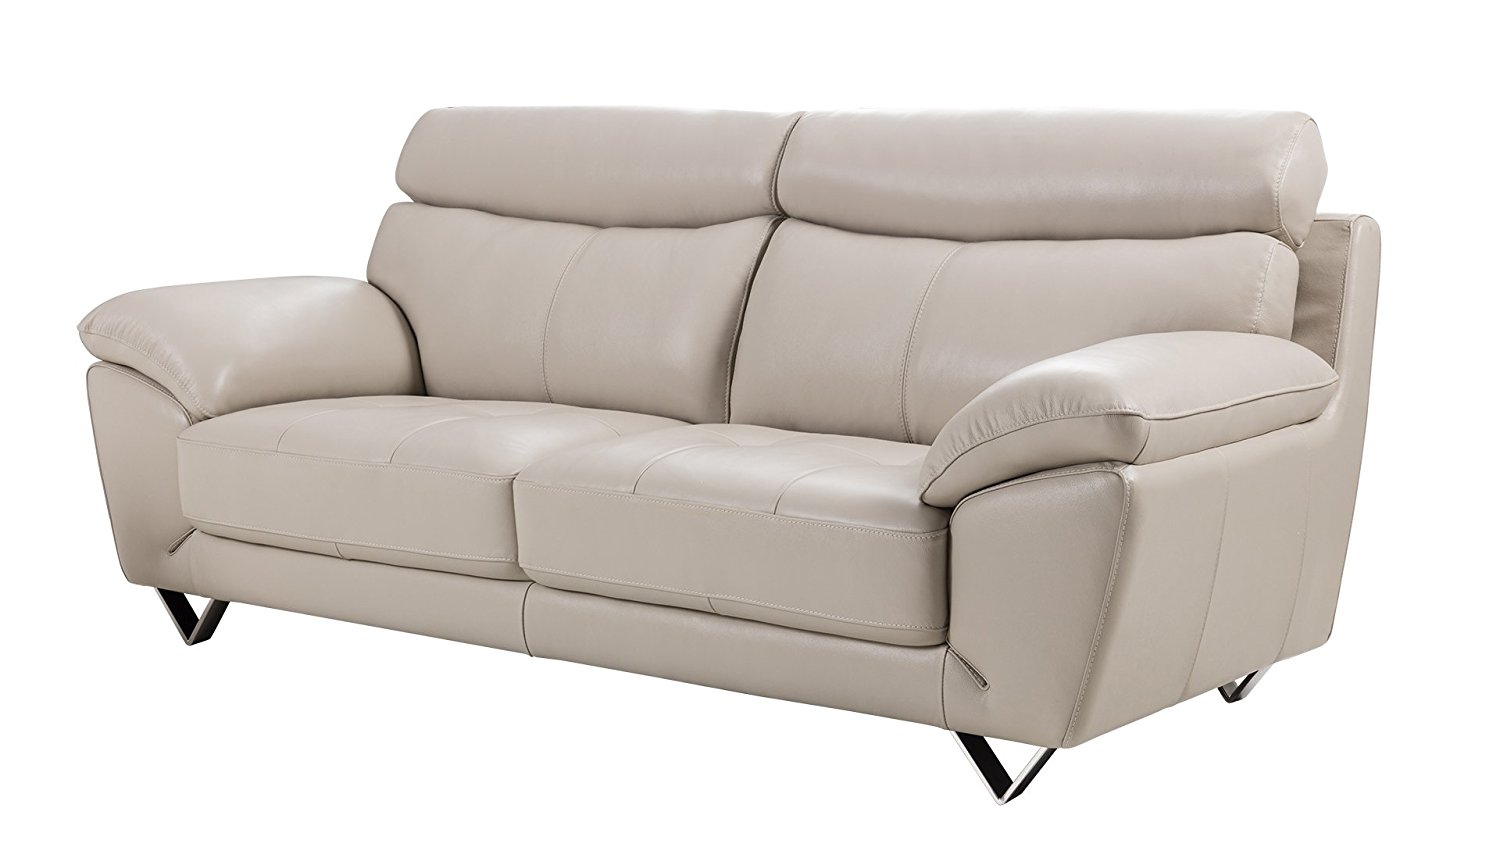 american eagle furniture sofa bed